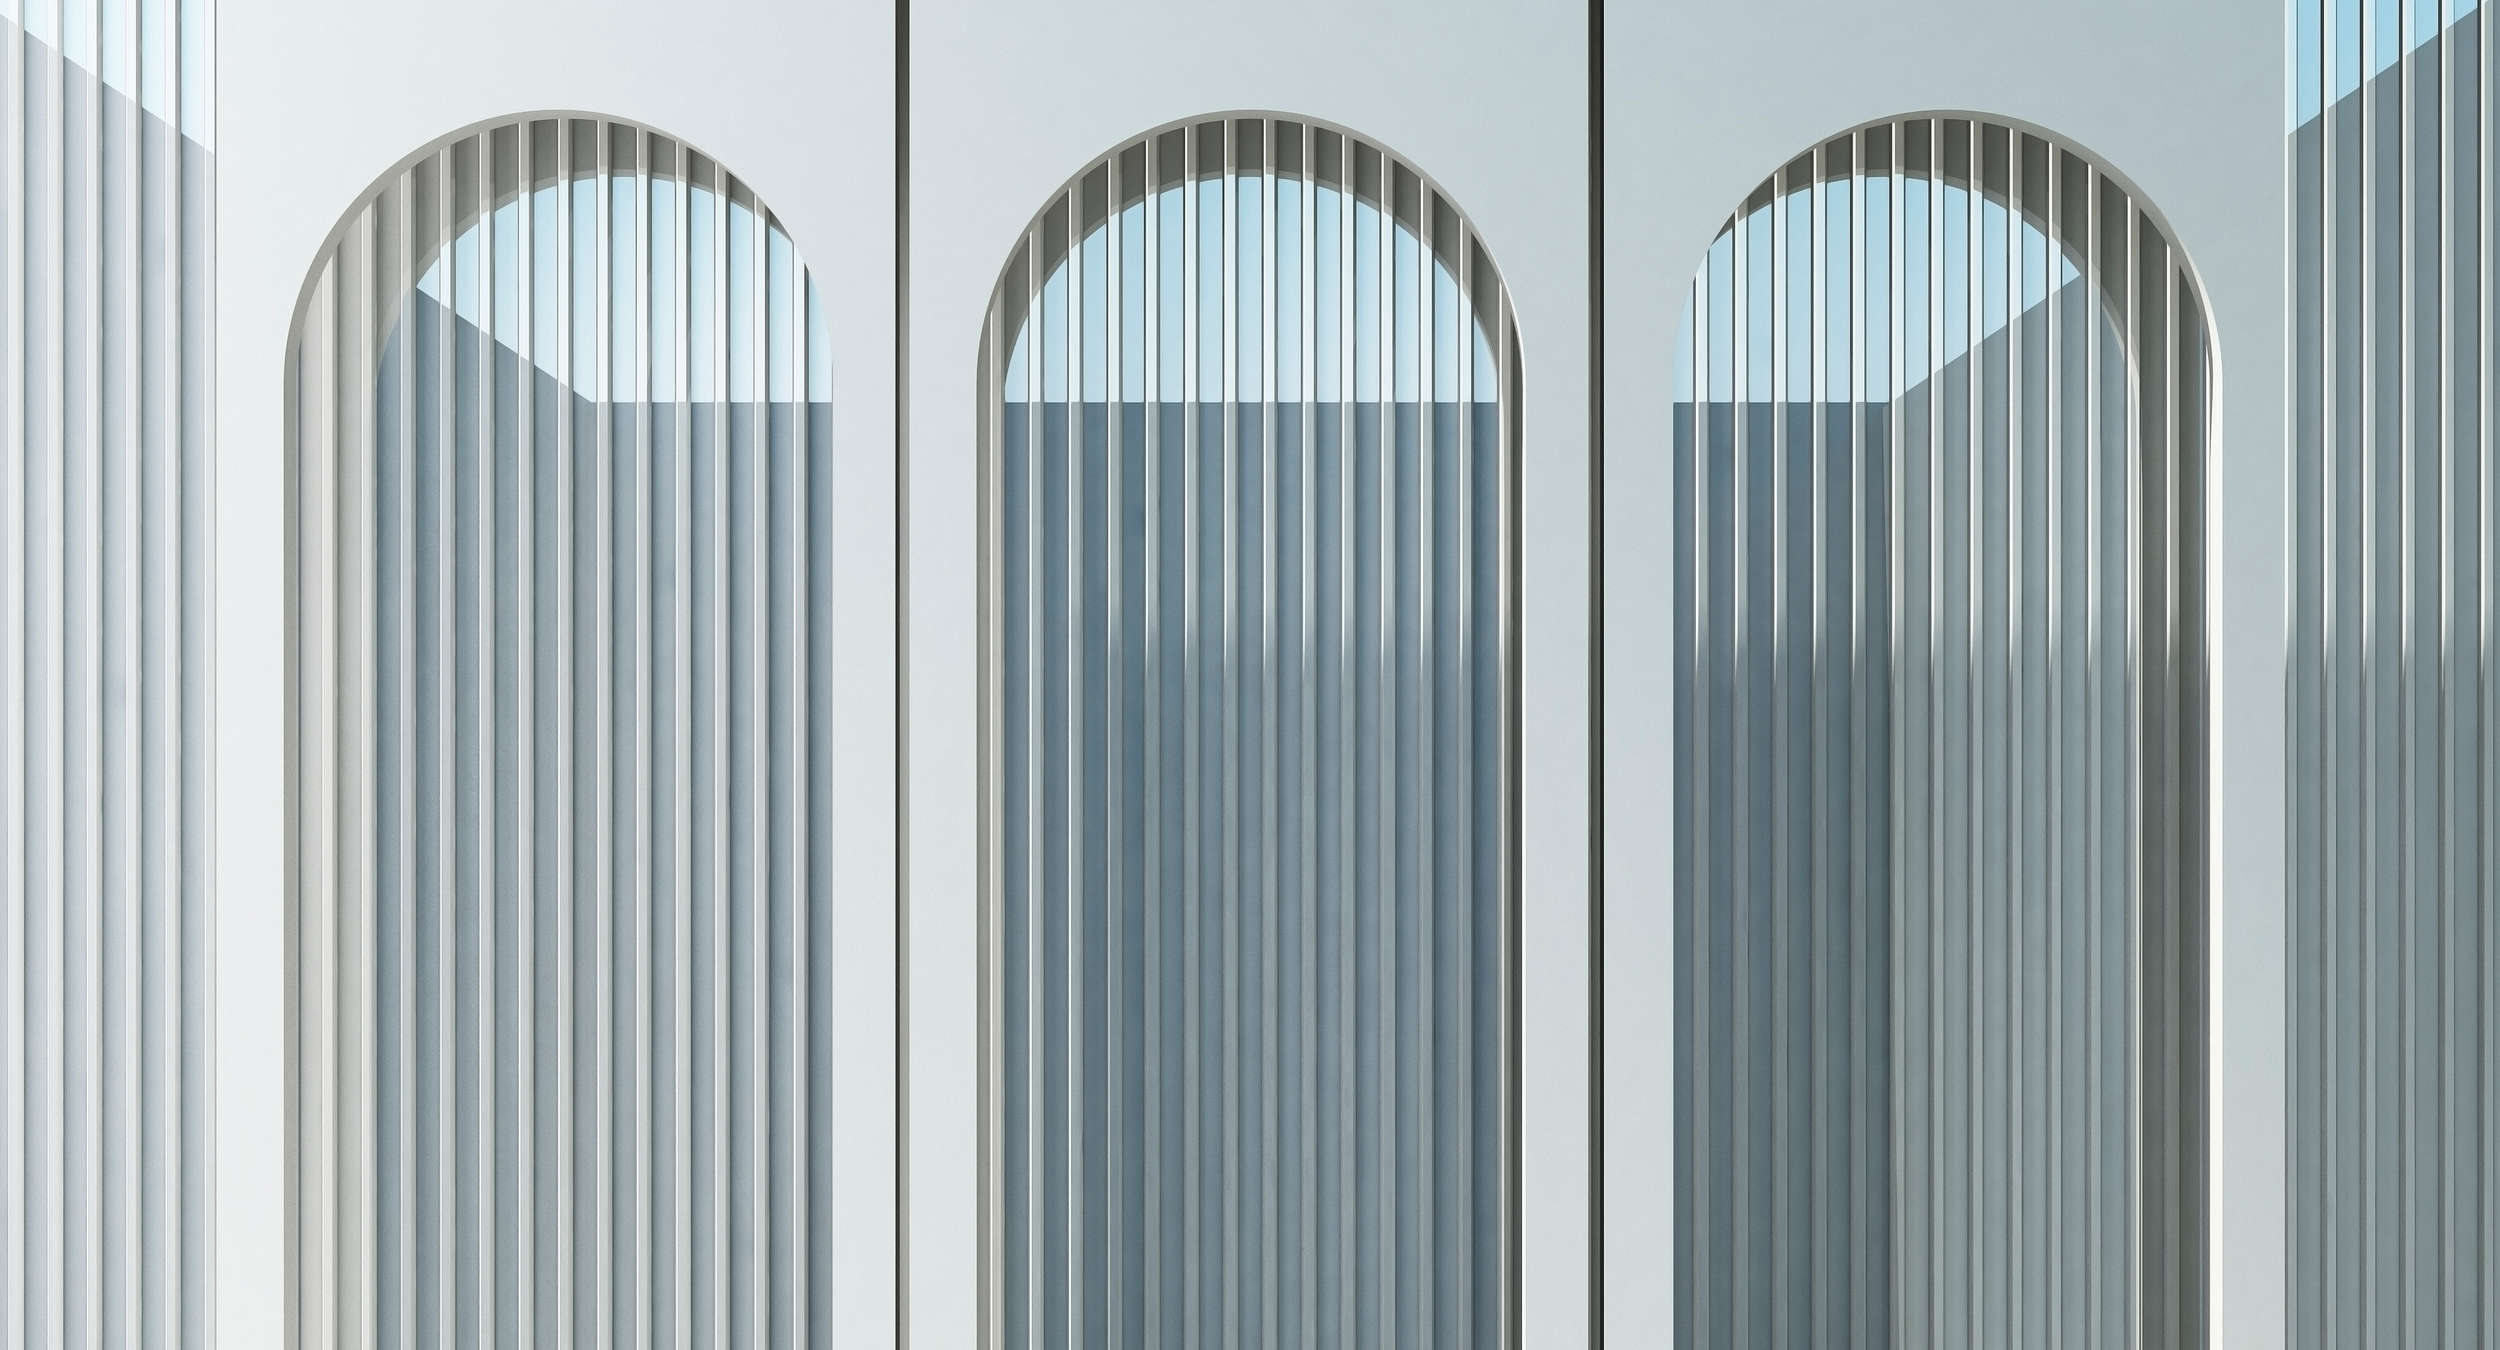             Escape Room 1 – Fototapete moderne Architektur Blau & Grau
        